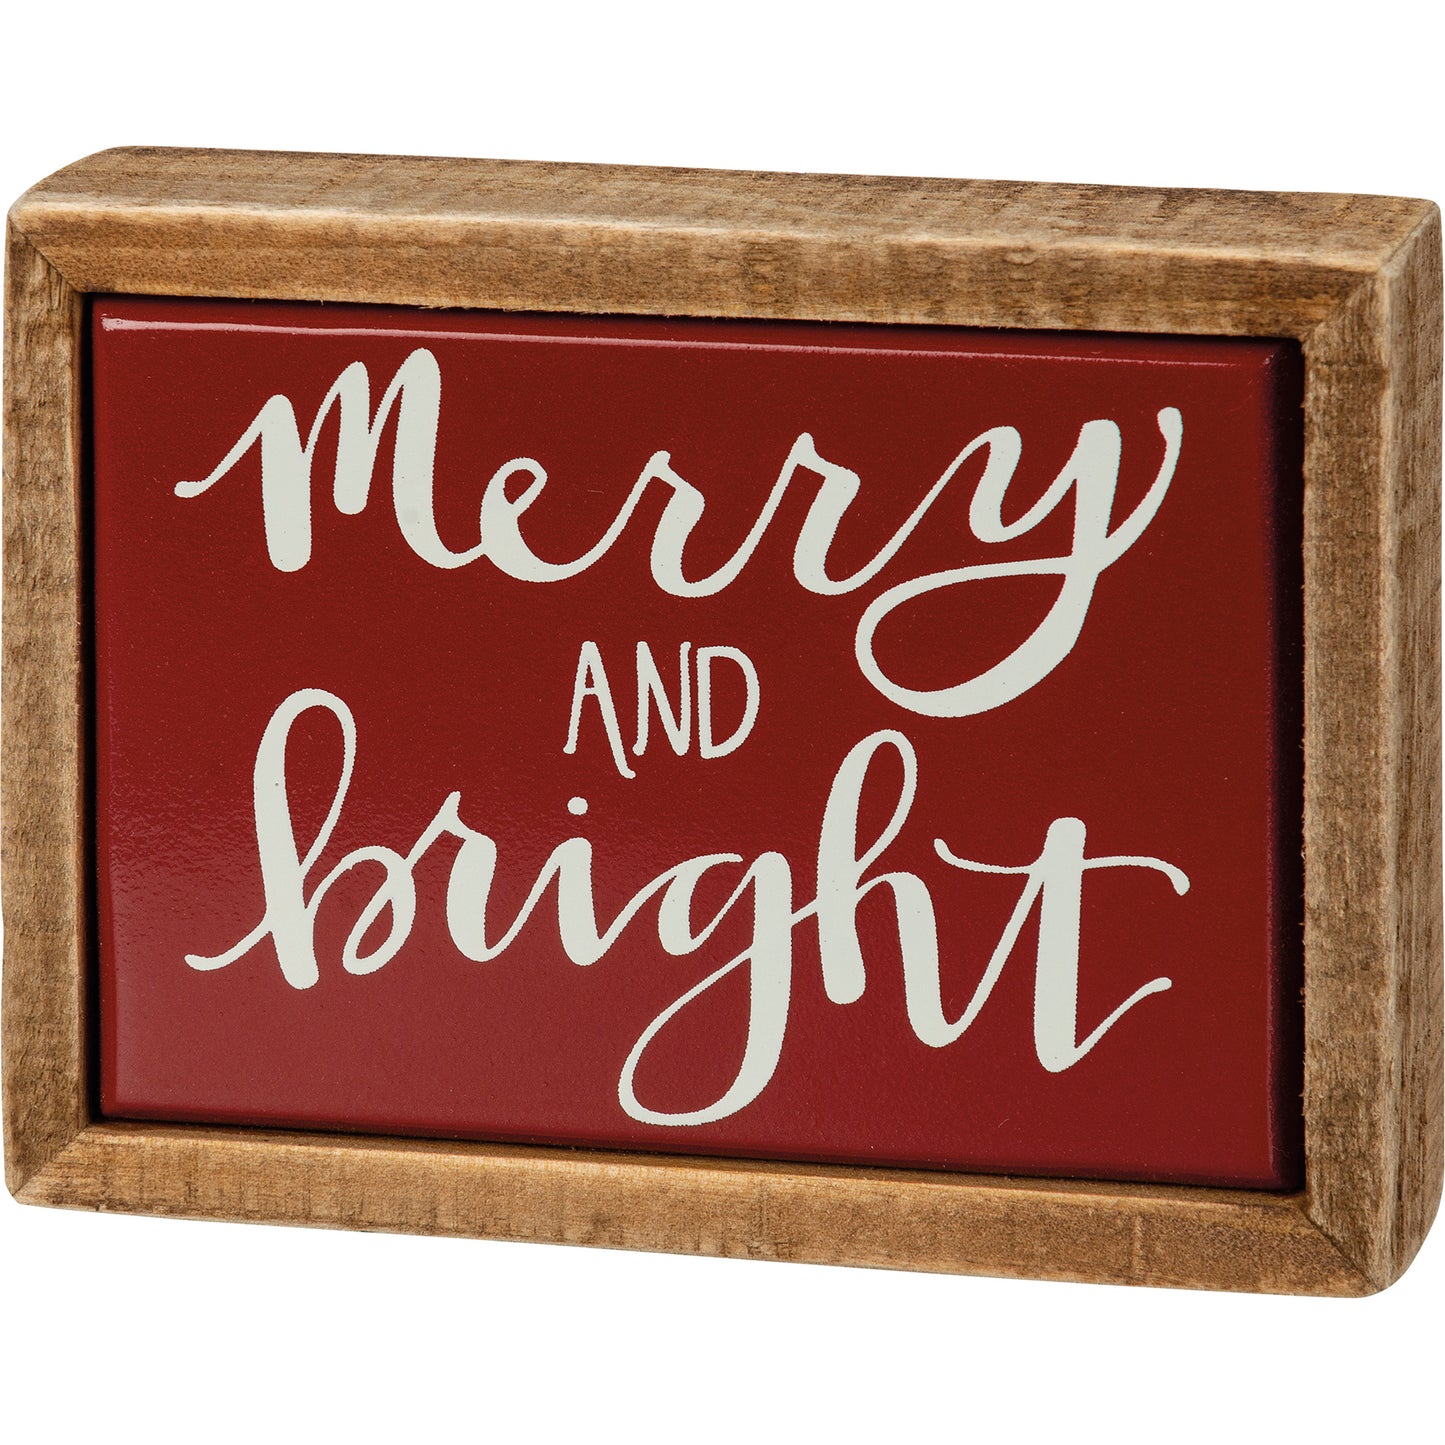 Merry and Bright Mini Box Sign